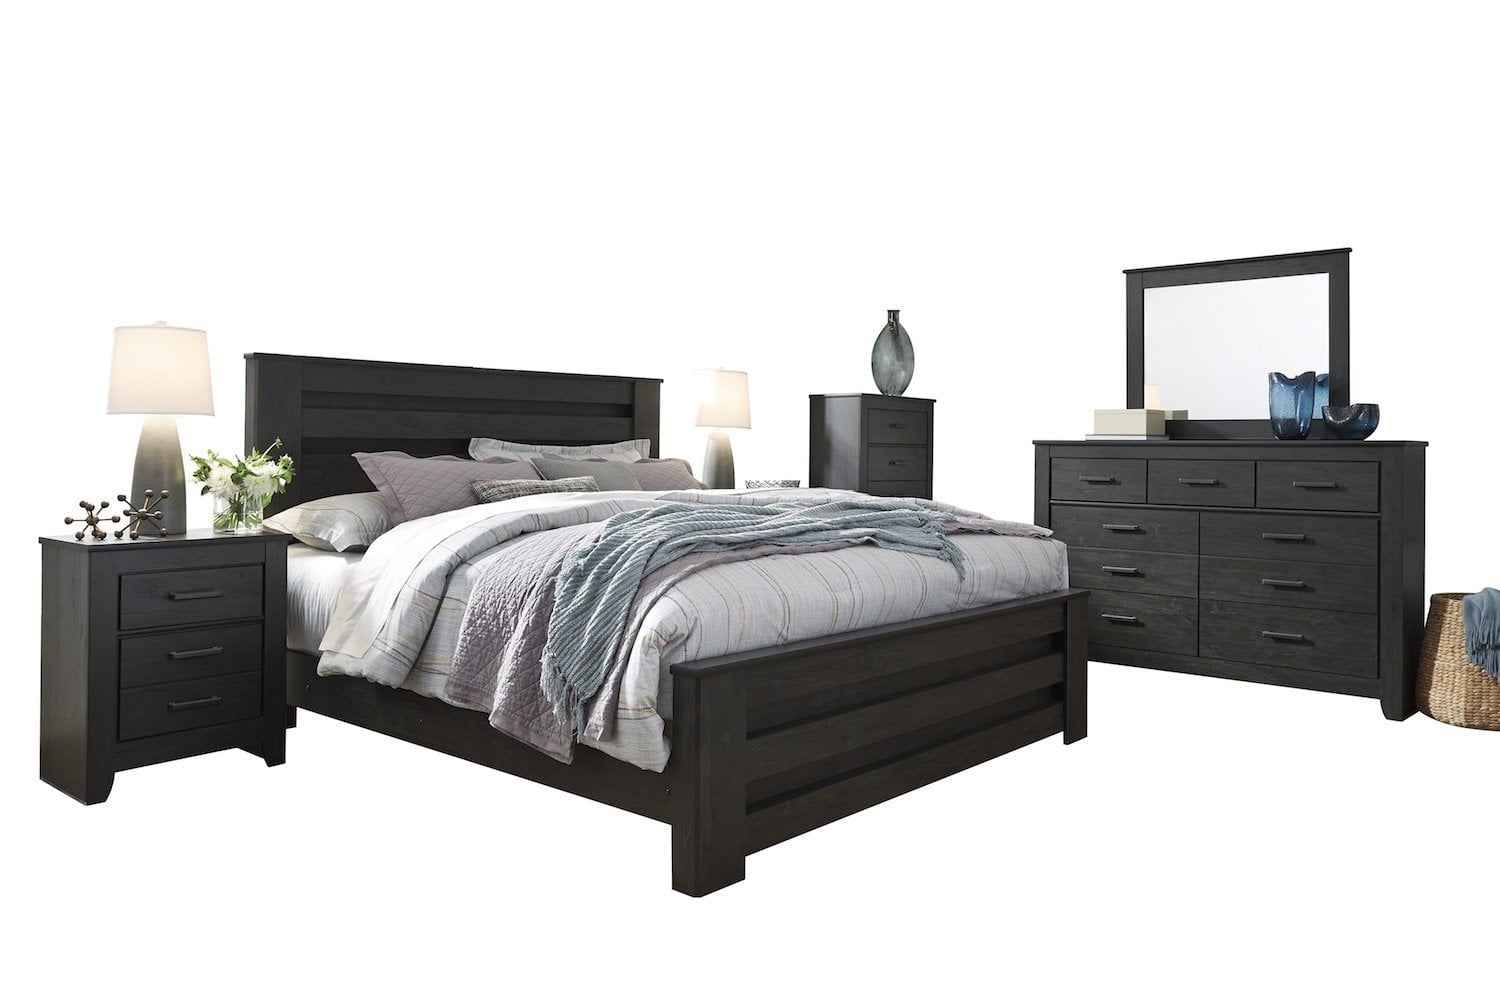 Ashley Furniture Brinxton 6 Pc Queen Panel Bedroom Set W 2 Nightstand Chest Charcoal Gray Walmart Com Walmart Com